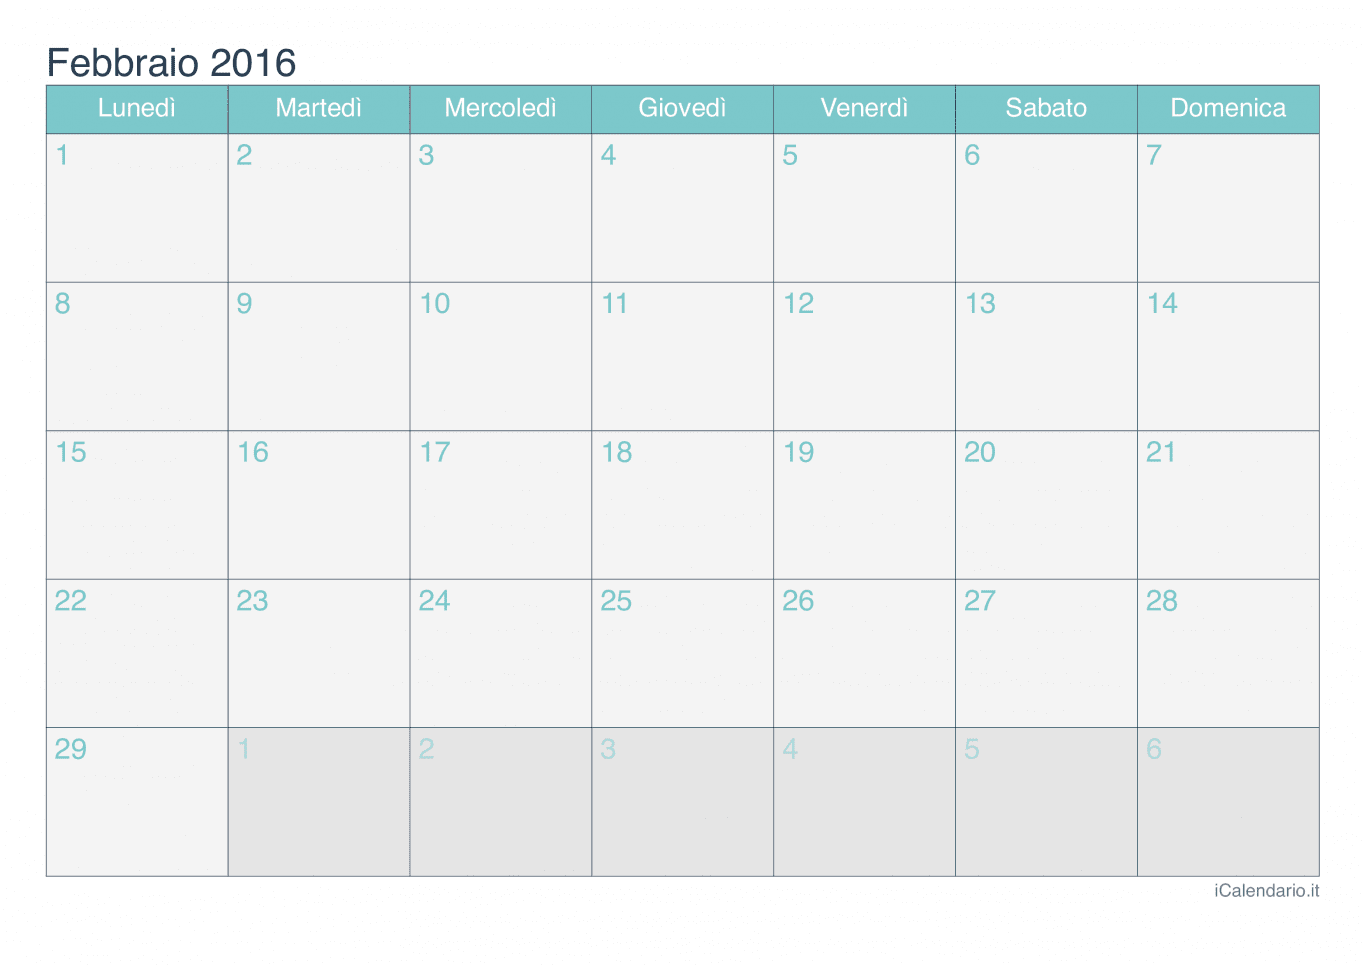 Calendario di febbraio 2016 - Turchese